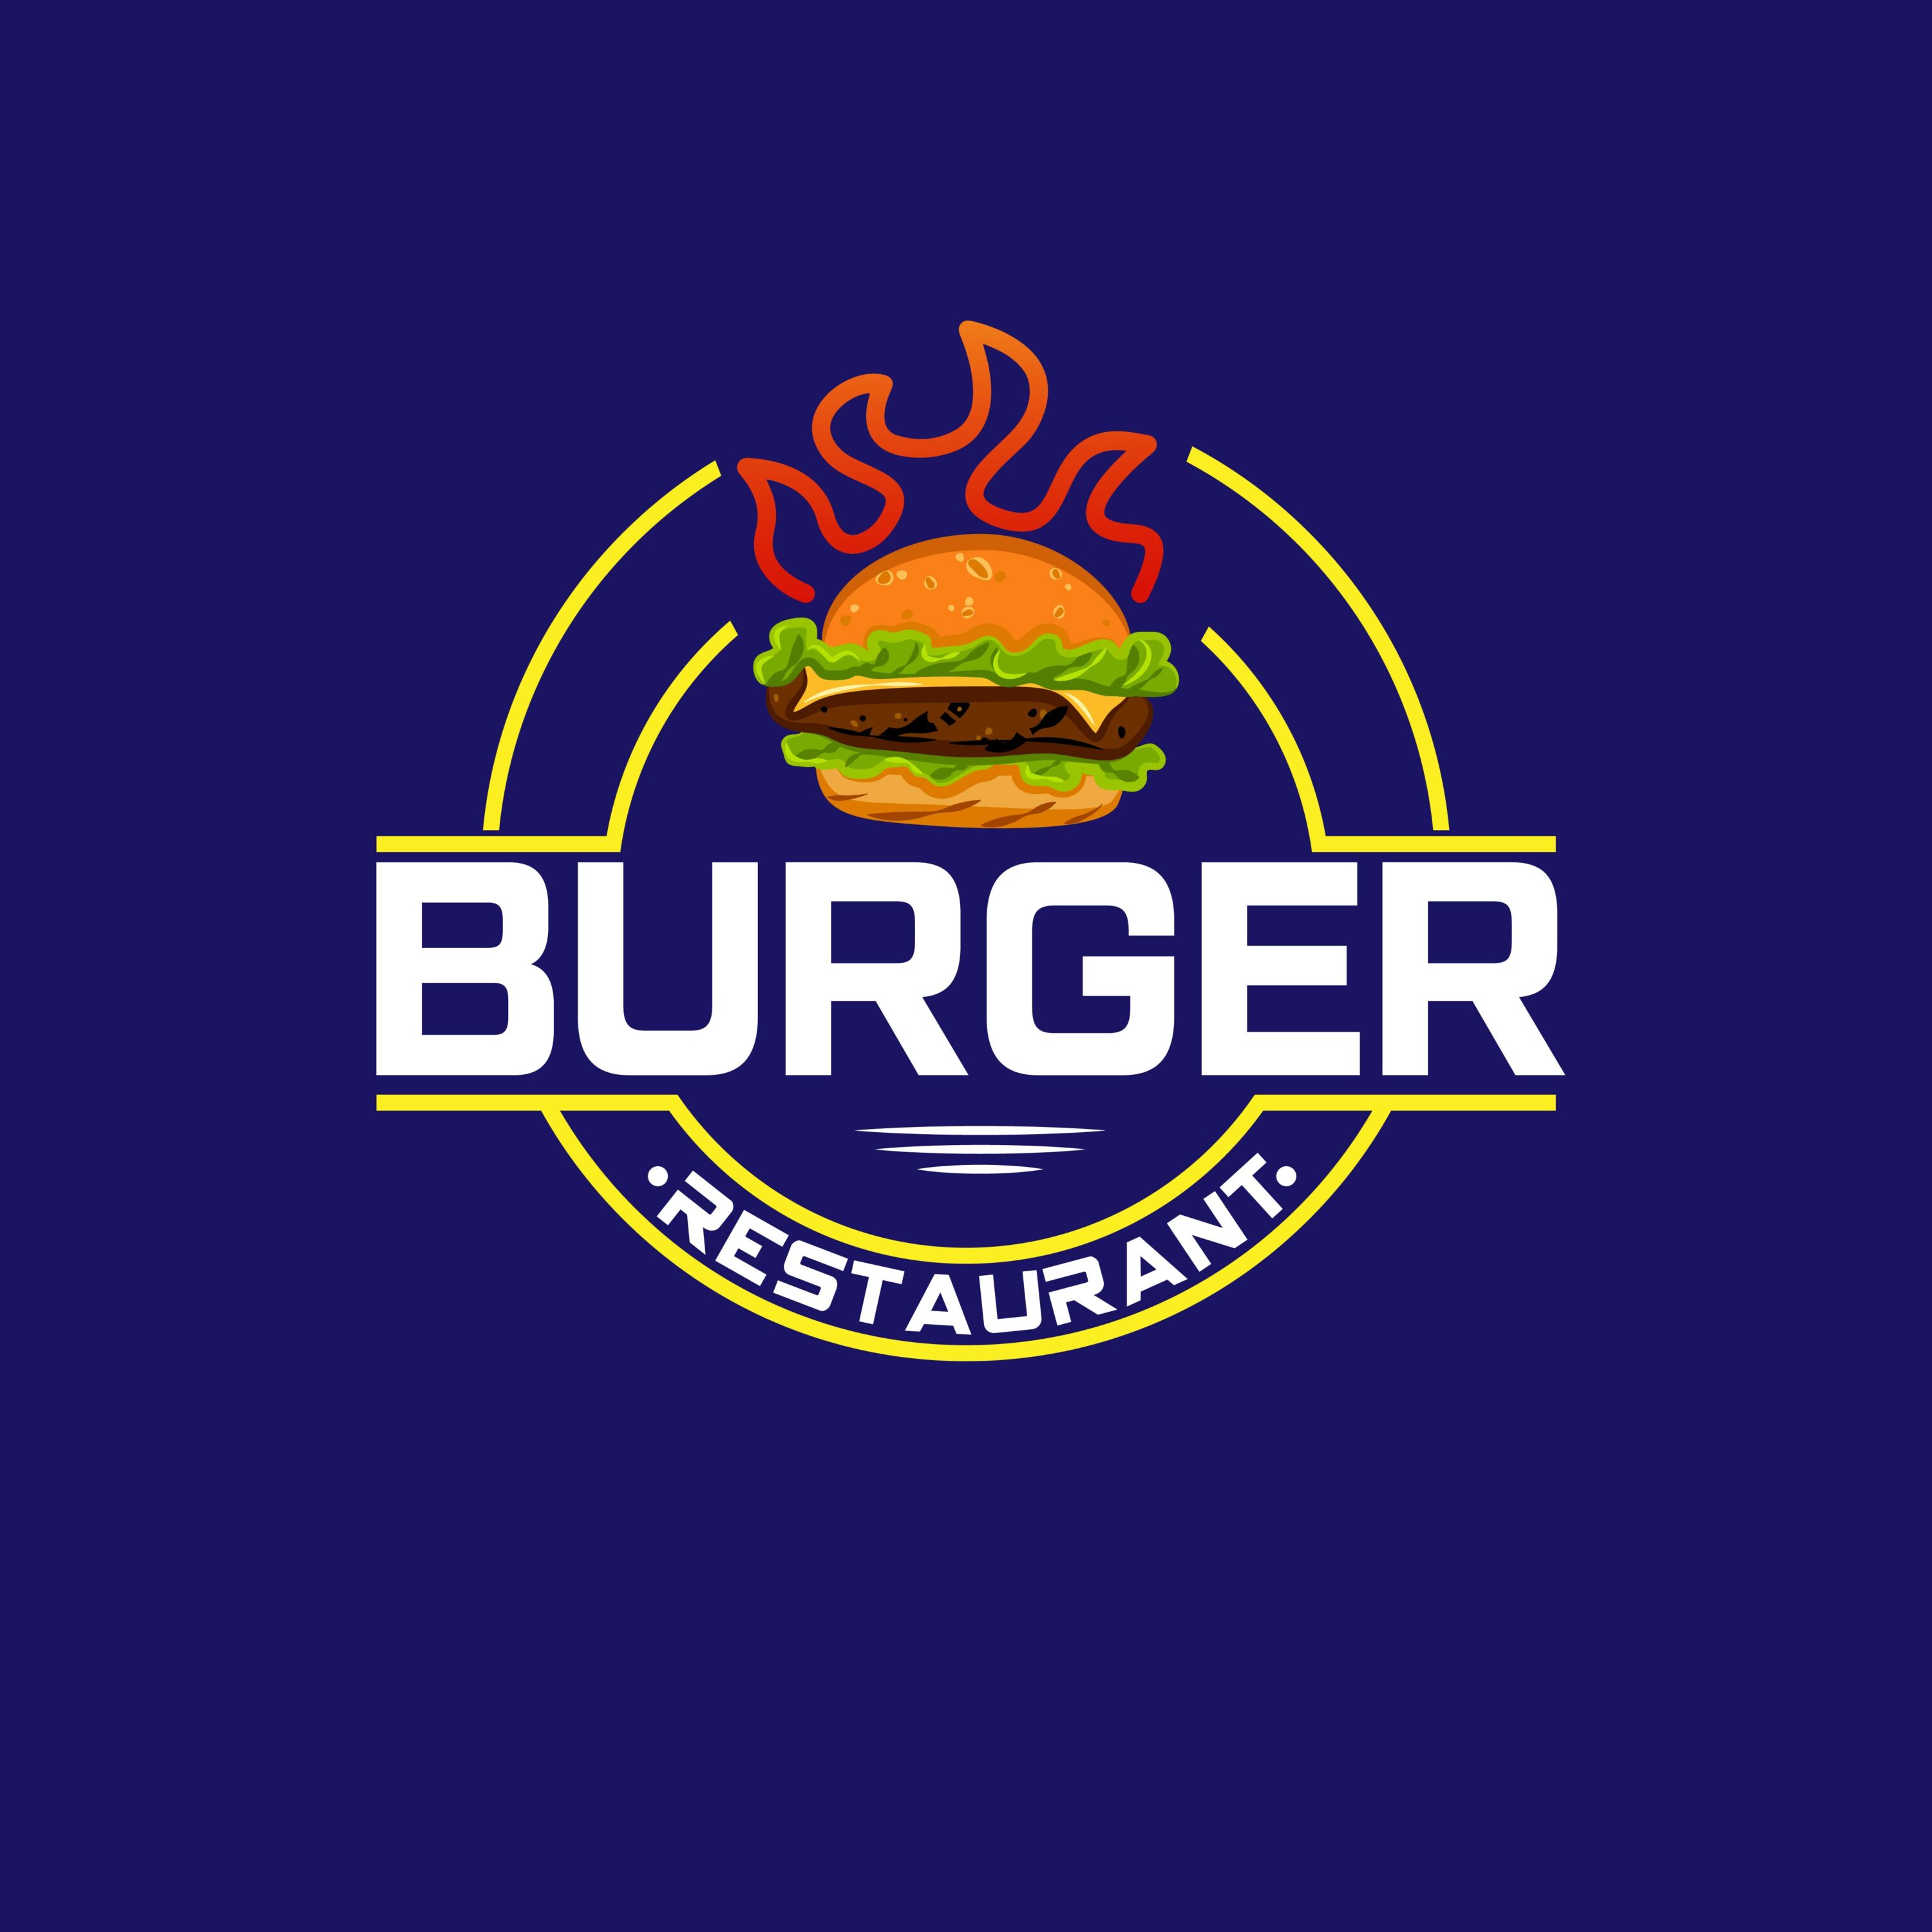 Restaurant Logo preview image.